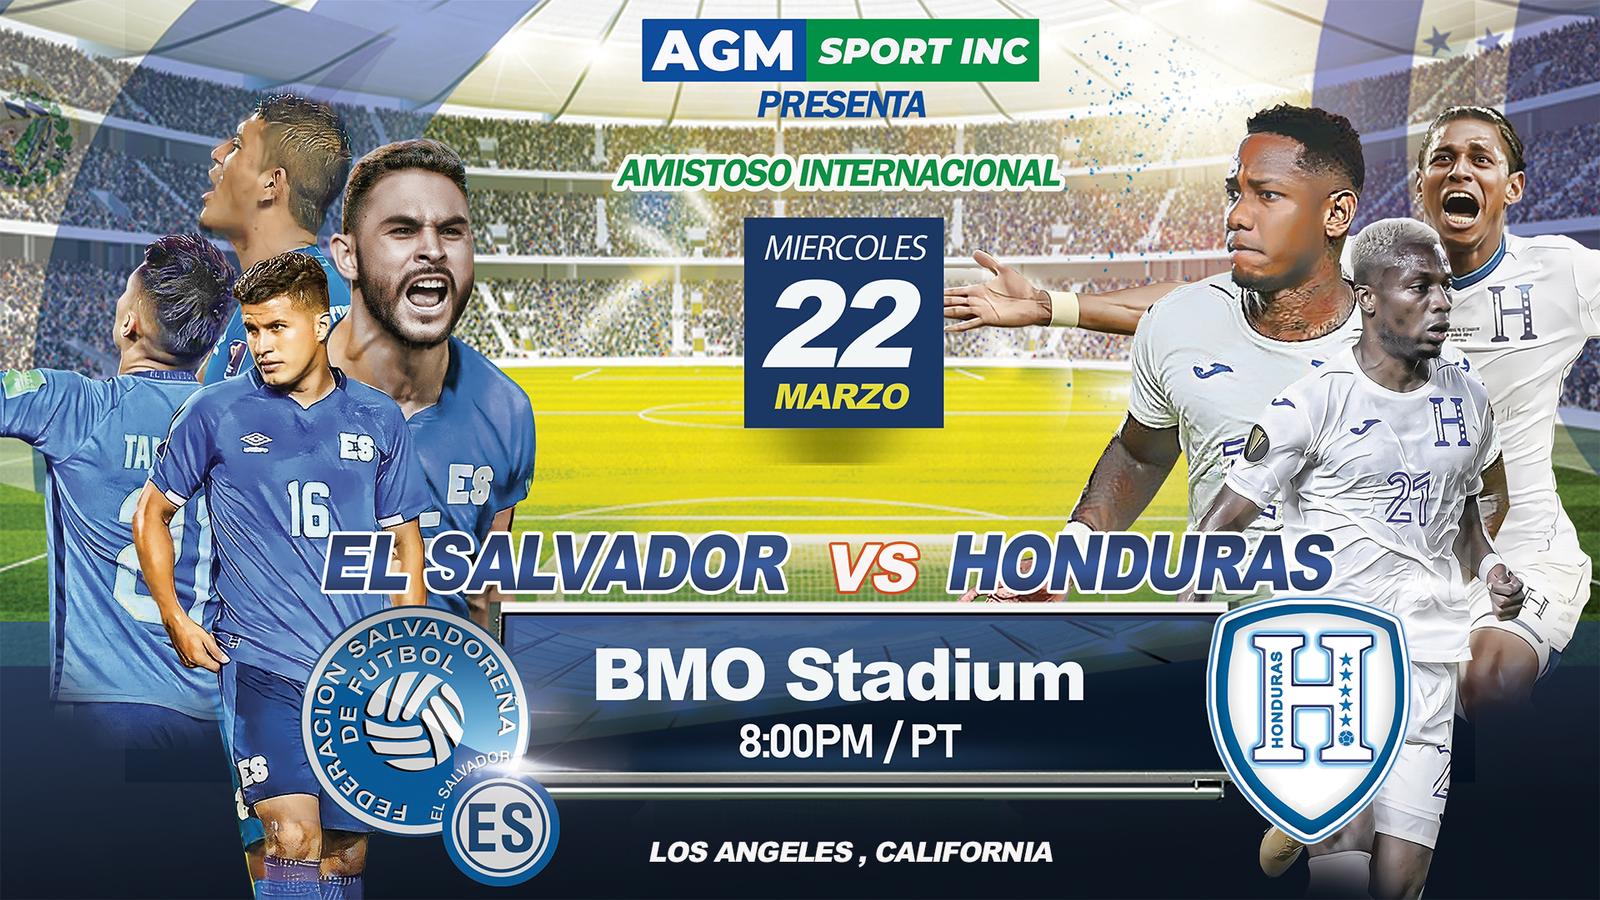 El Salvador vs Honduras|BMO Stadium